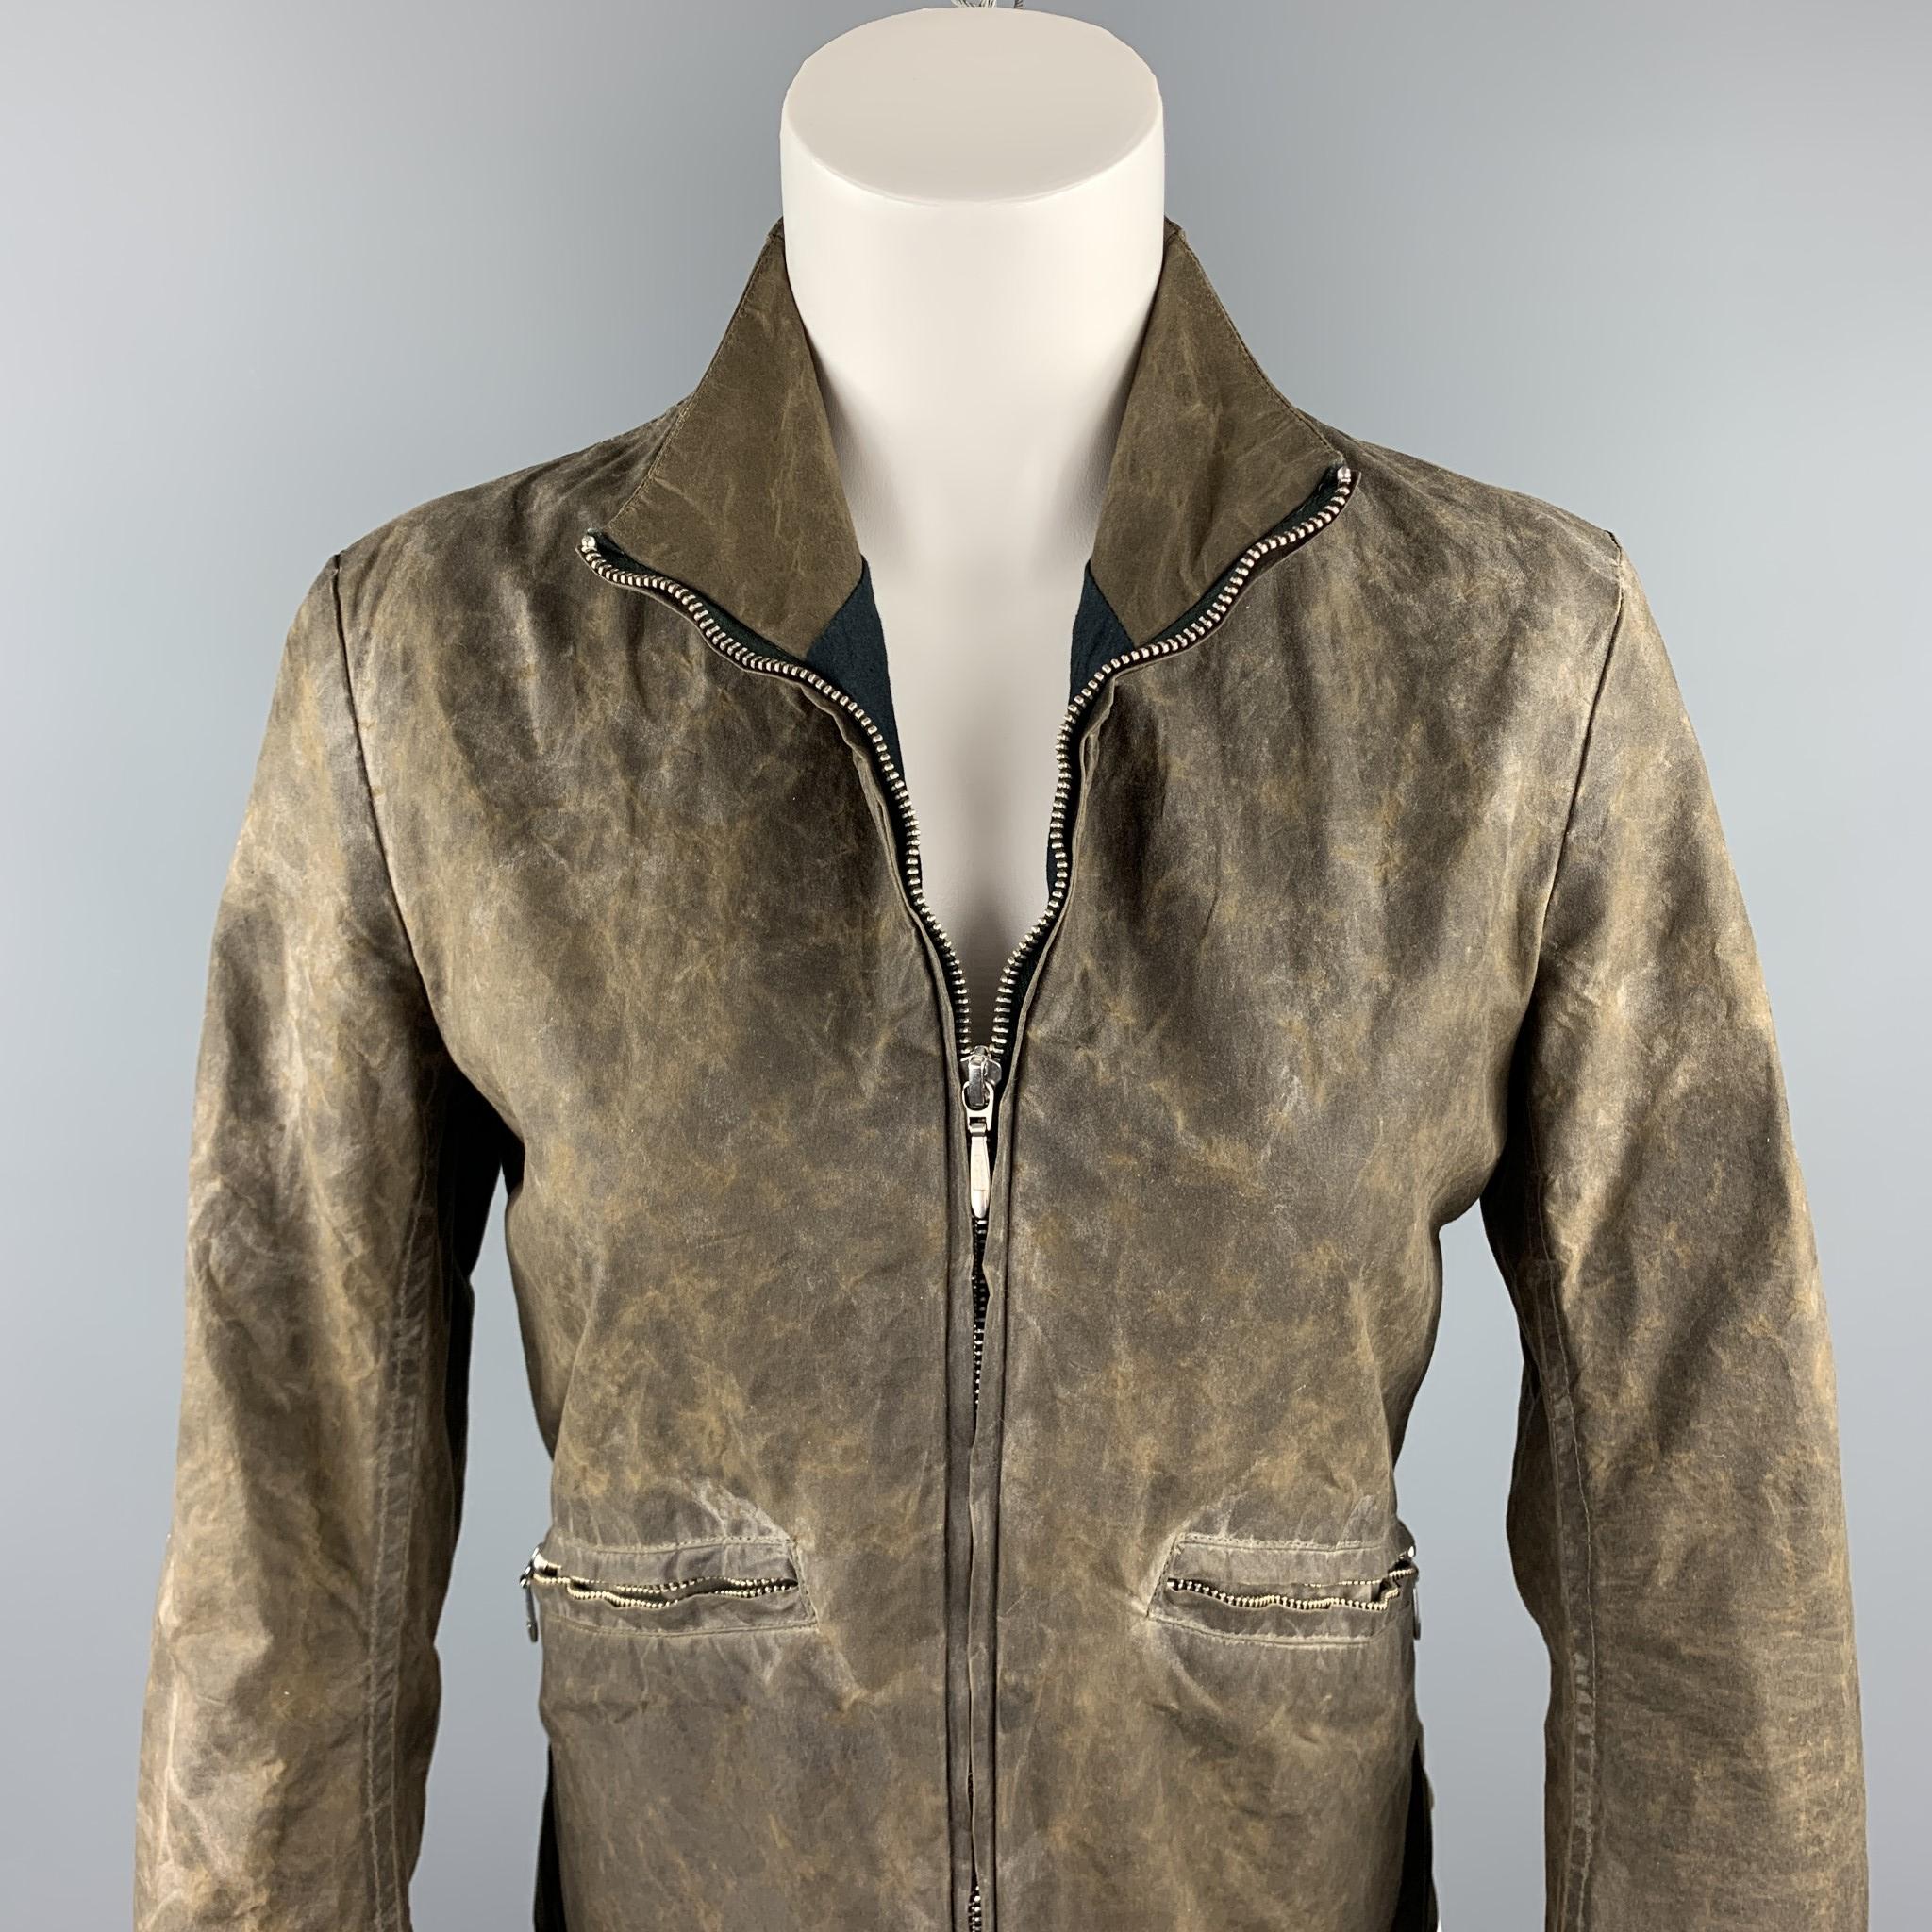 Paul Harnden - 3 For Sale on 1stDibs | paul harnden jacket, paul 